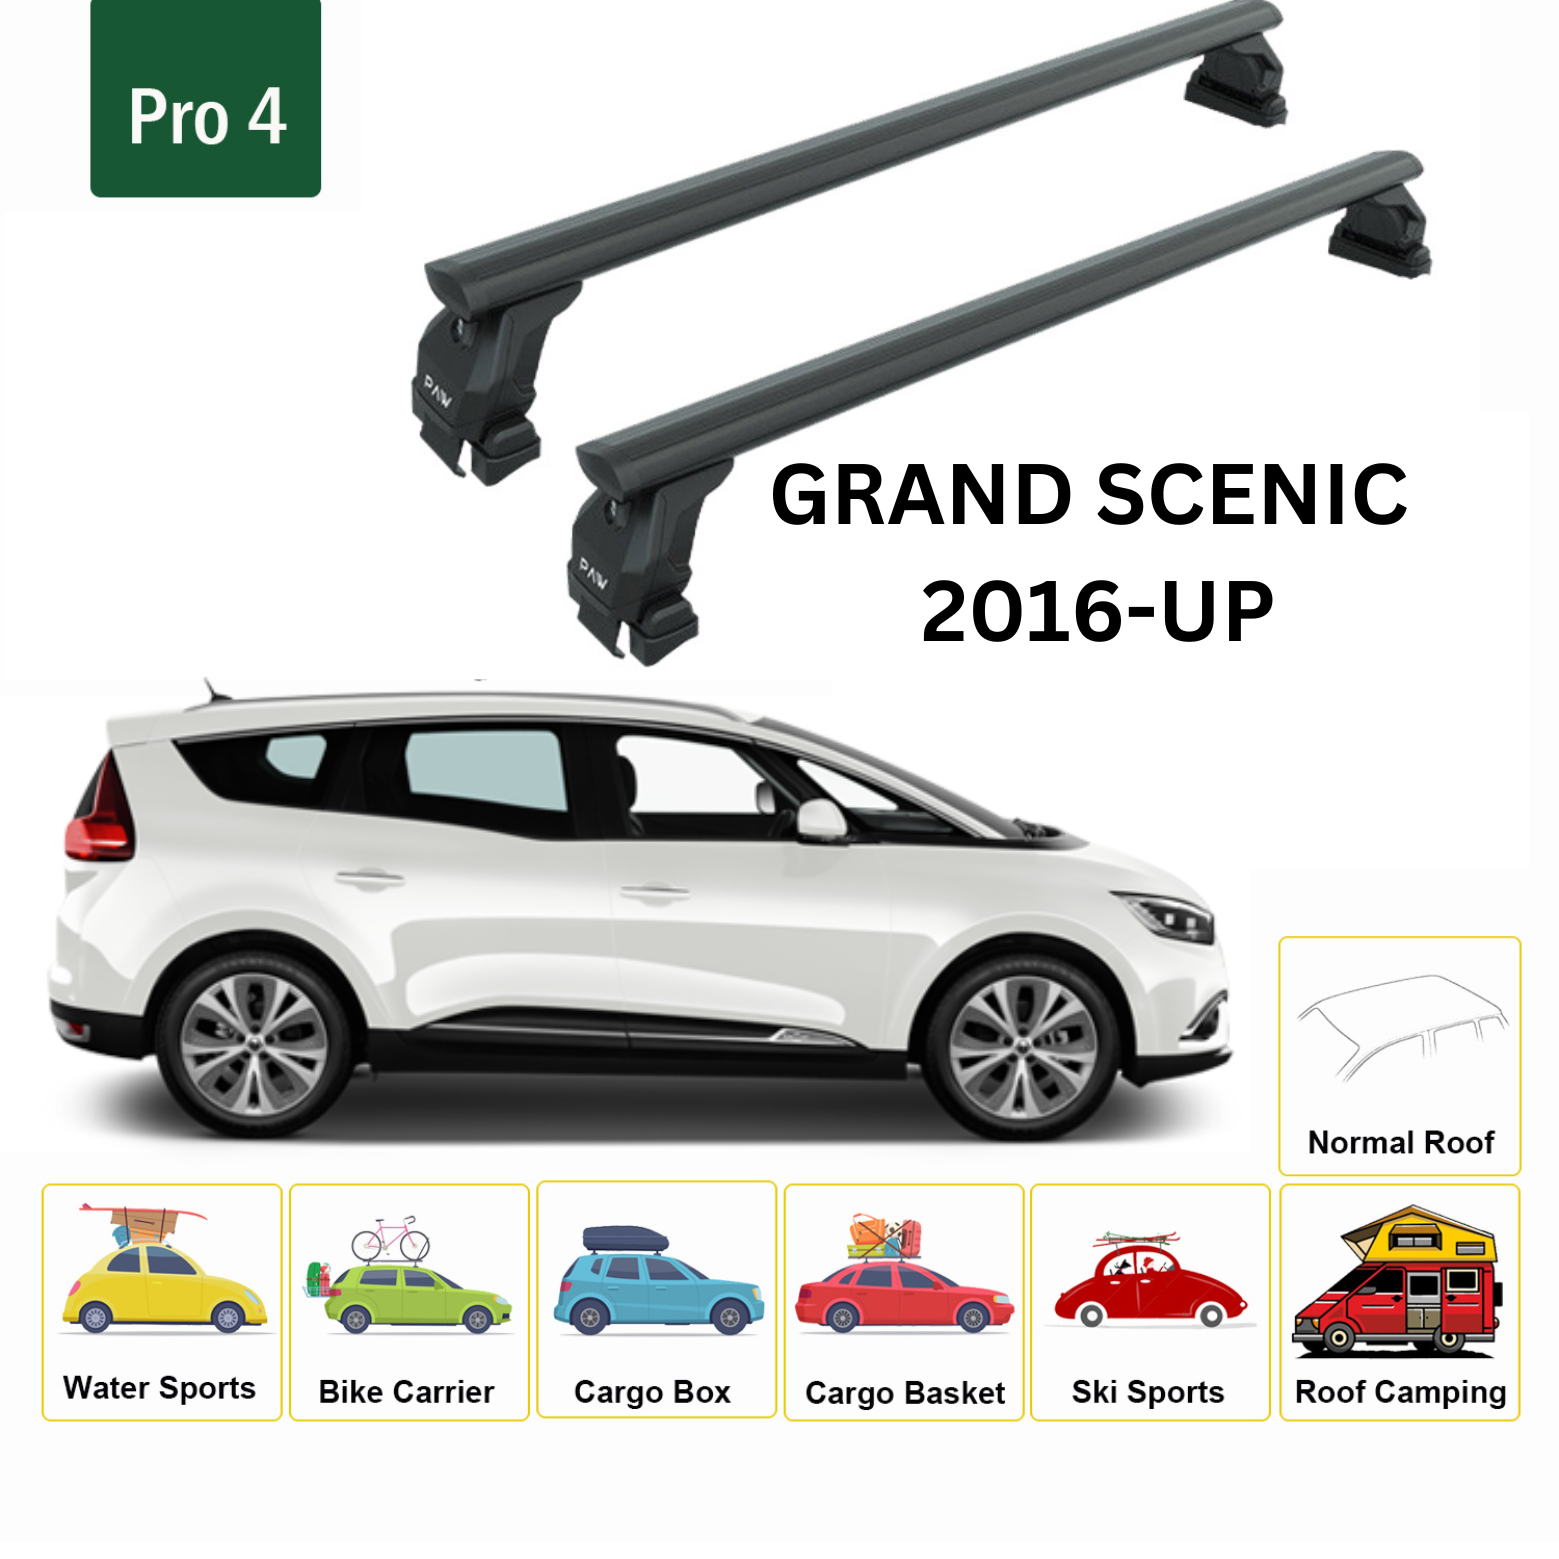 For Renault Grand Scenic 2016-Up Roof Rack System, Aluminium Cross Bar, Metal Bracket, Normal Roof, Black